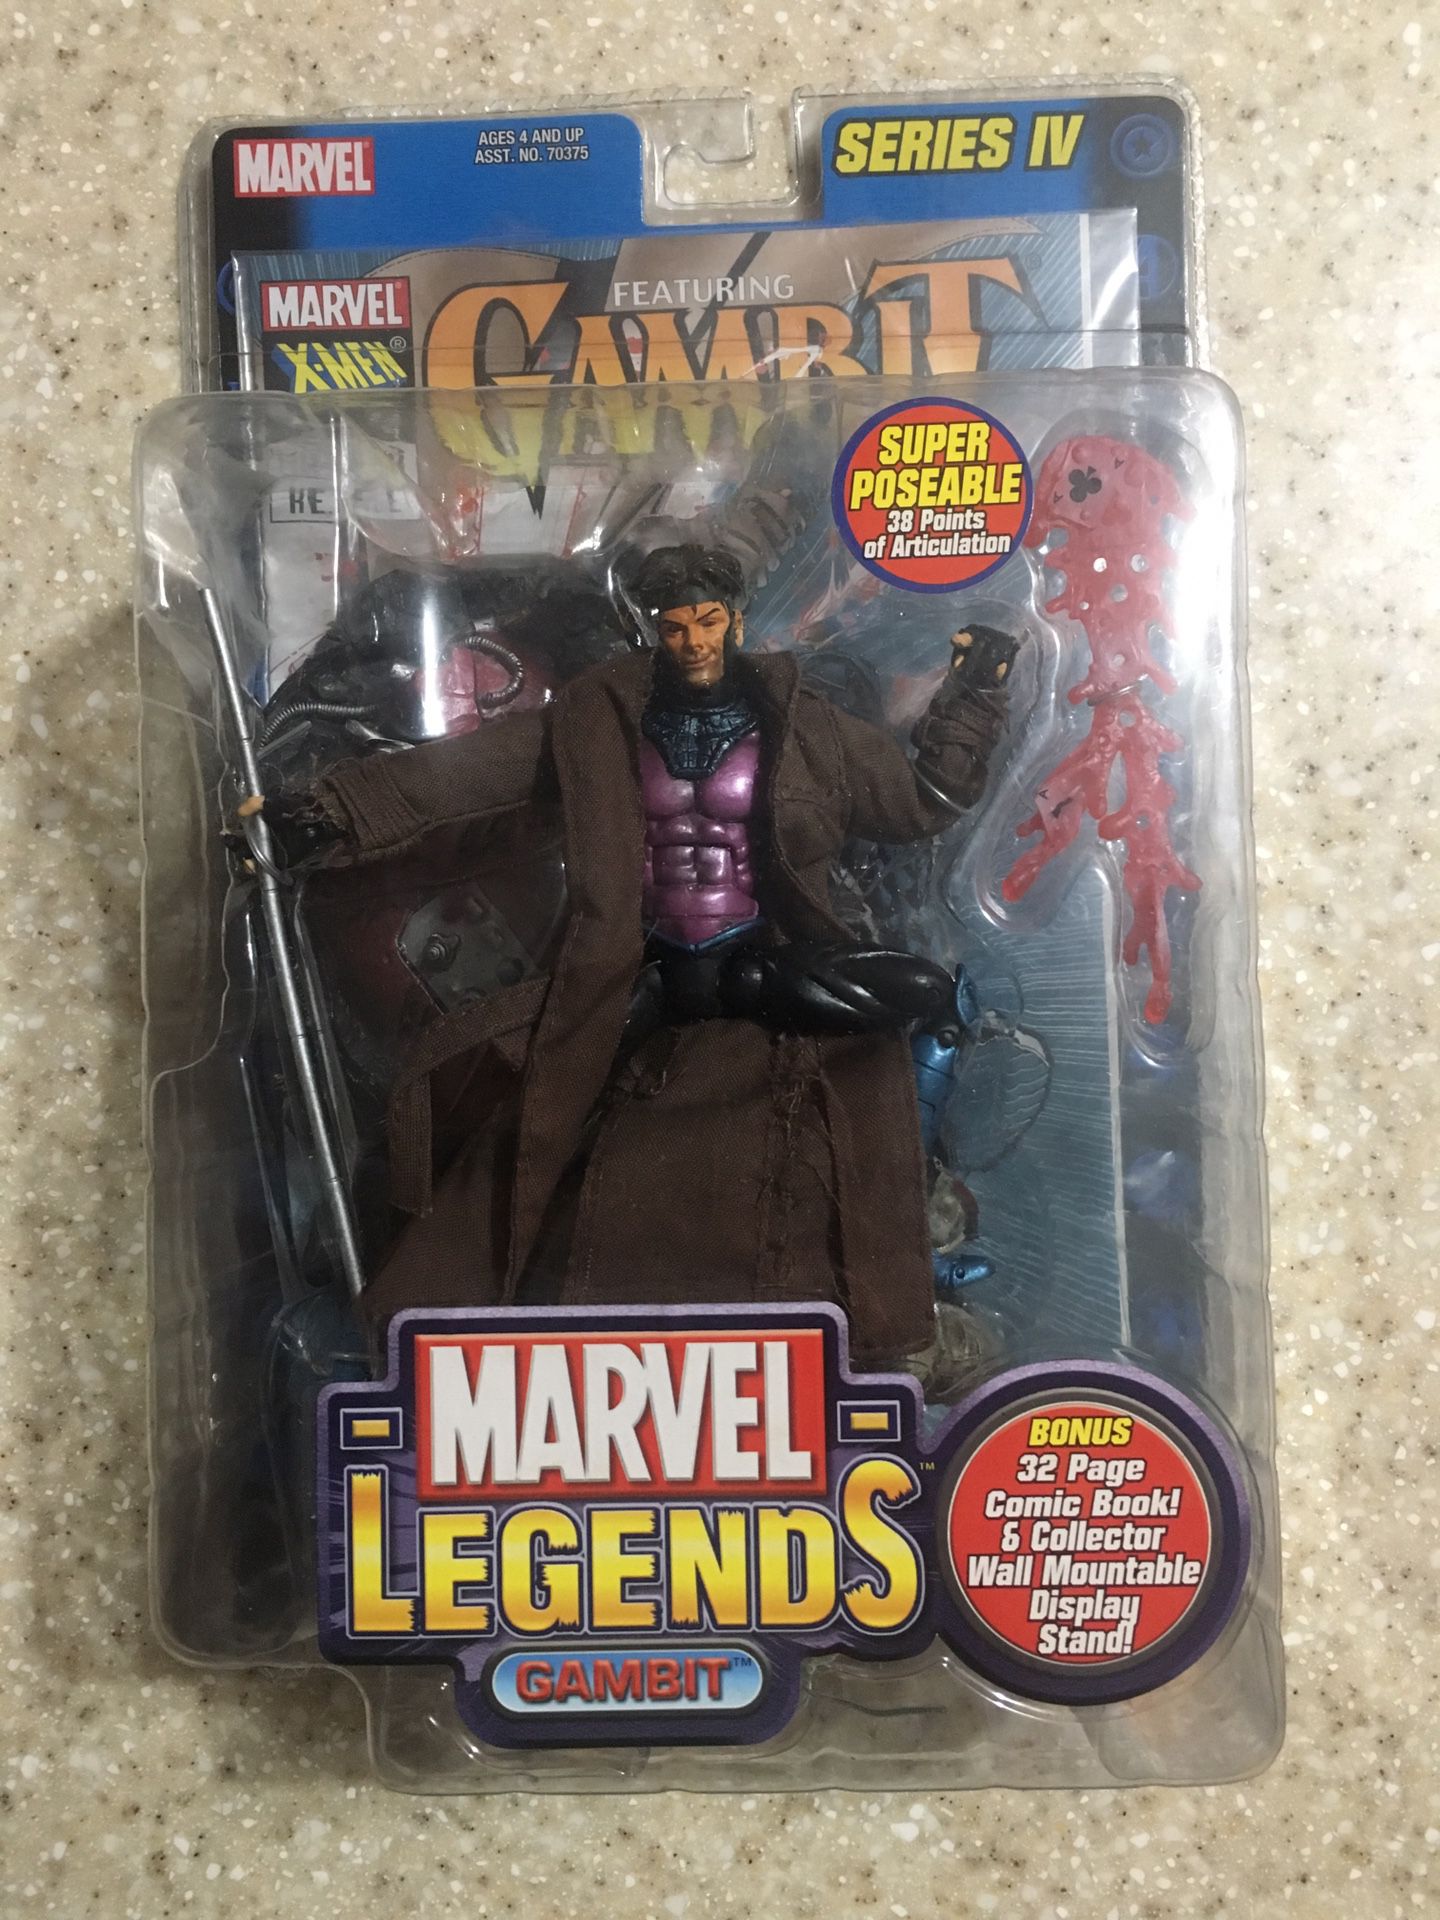 Gambit (X-Men) Marvel Legends Series IV Action Figure by Toy Biz